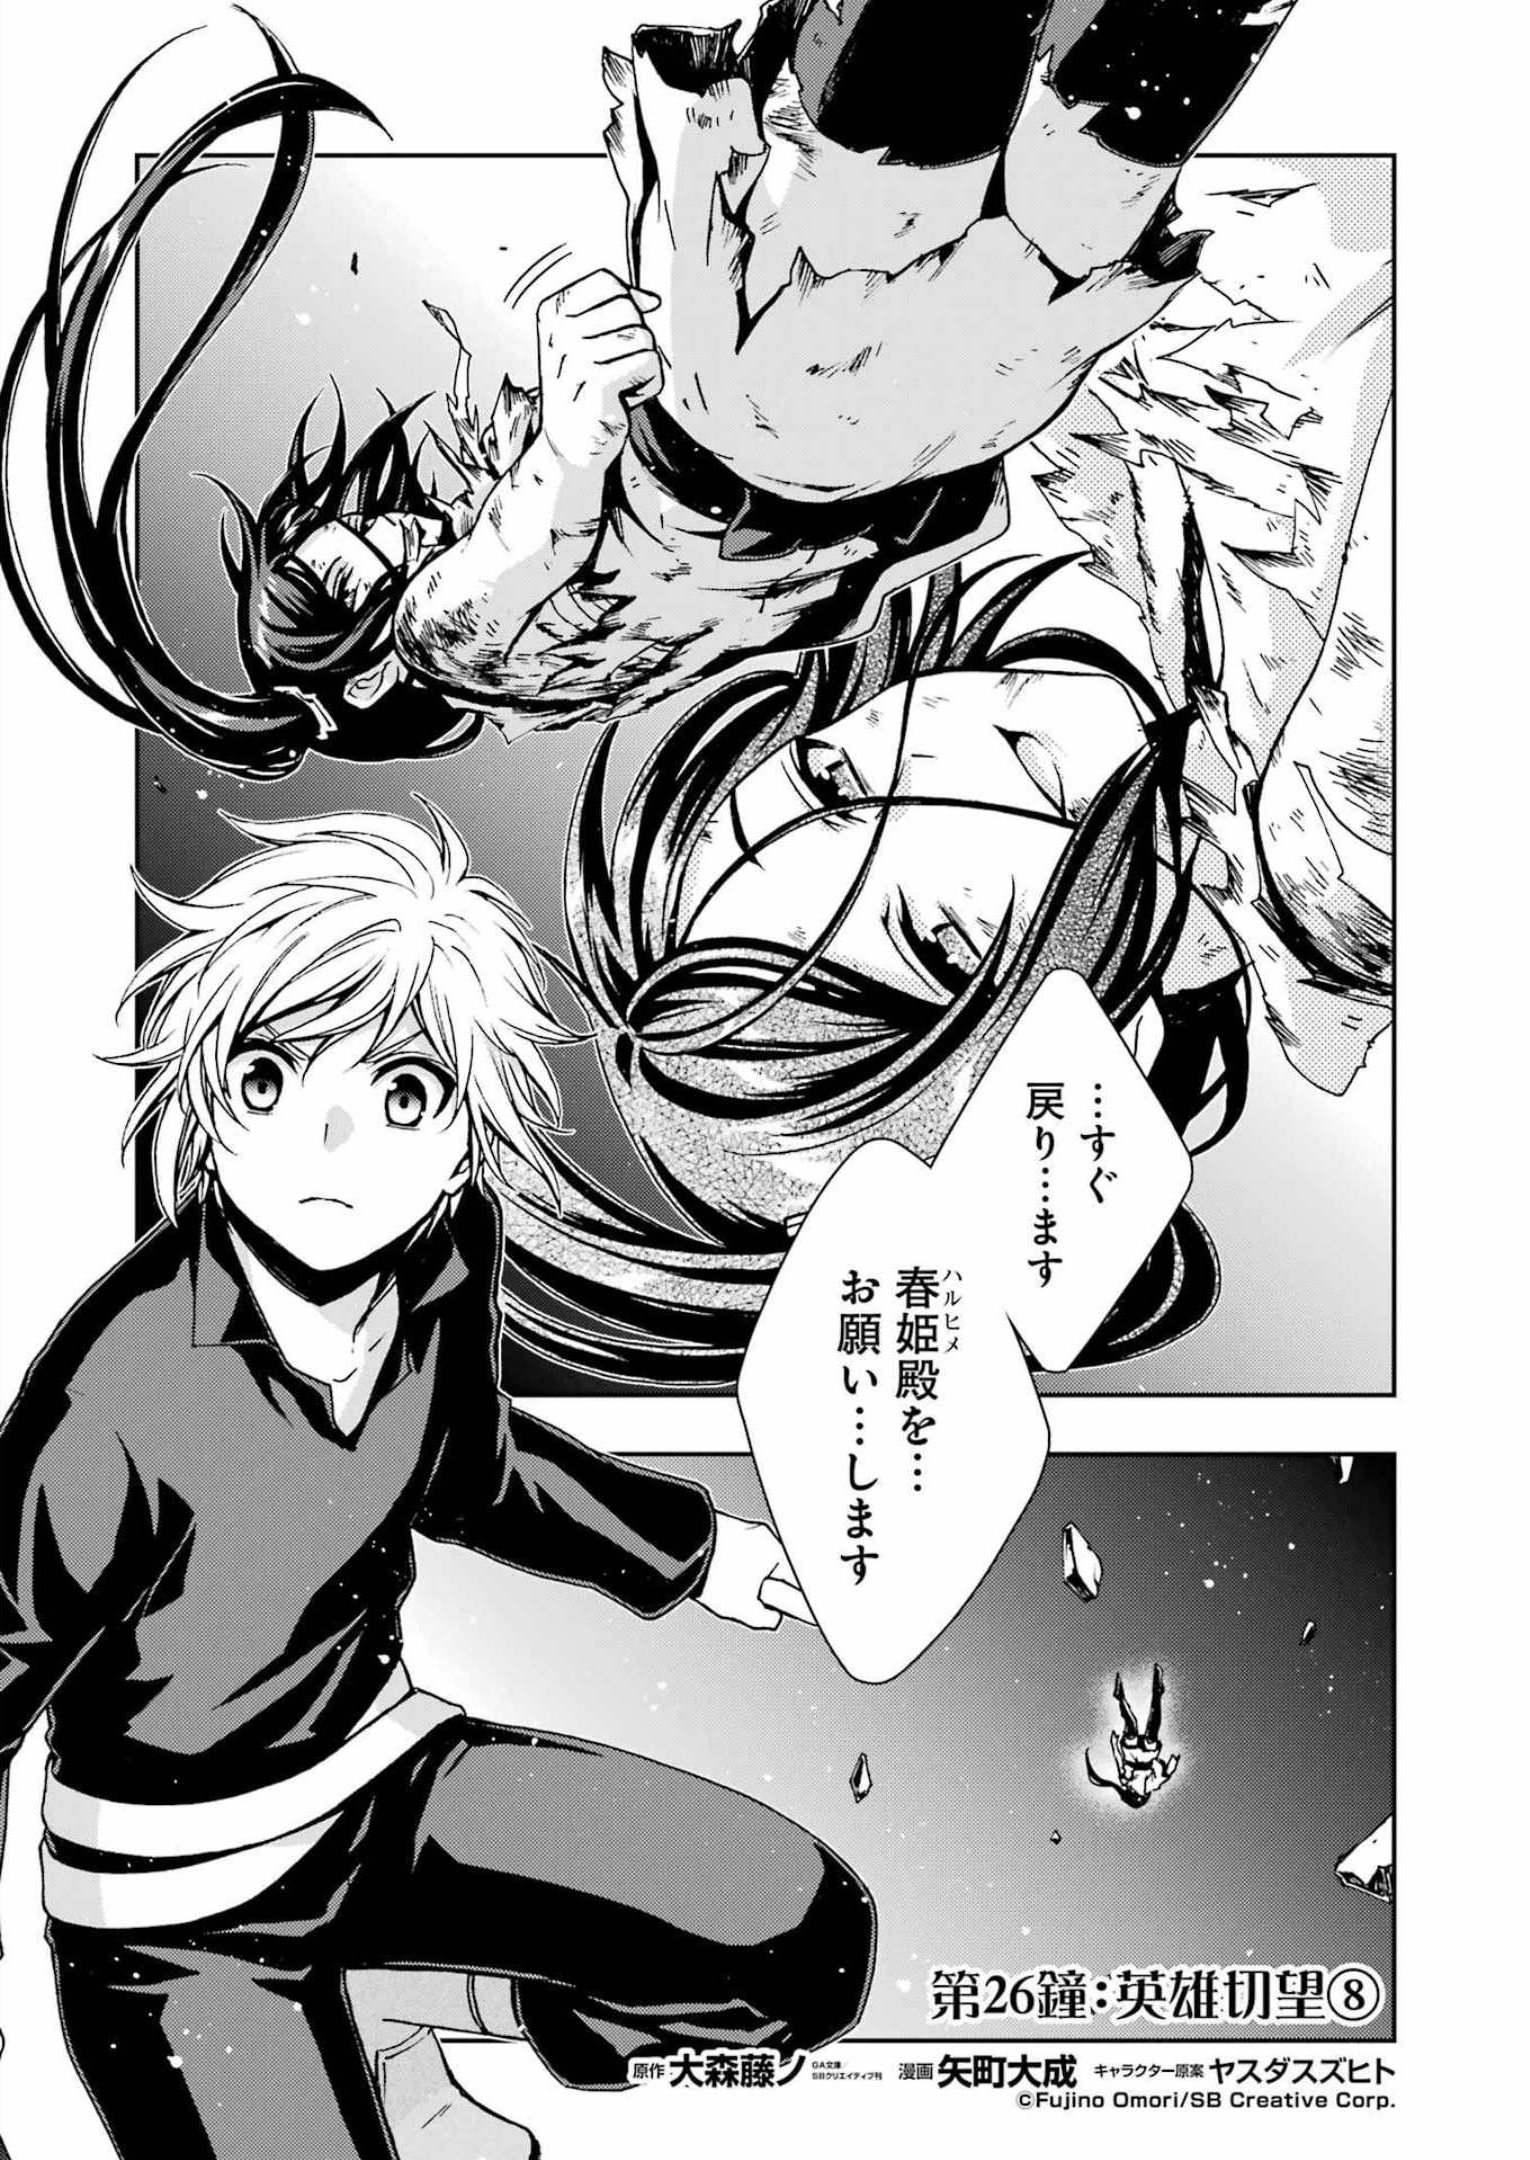 Danmachi Manga #85: Deleite